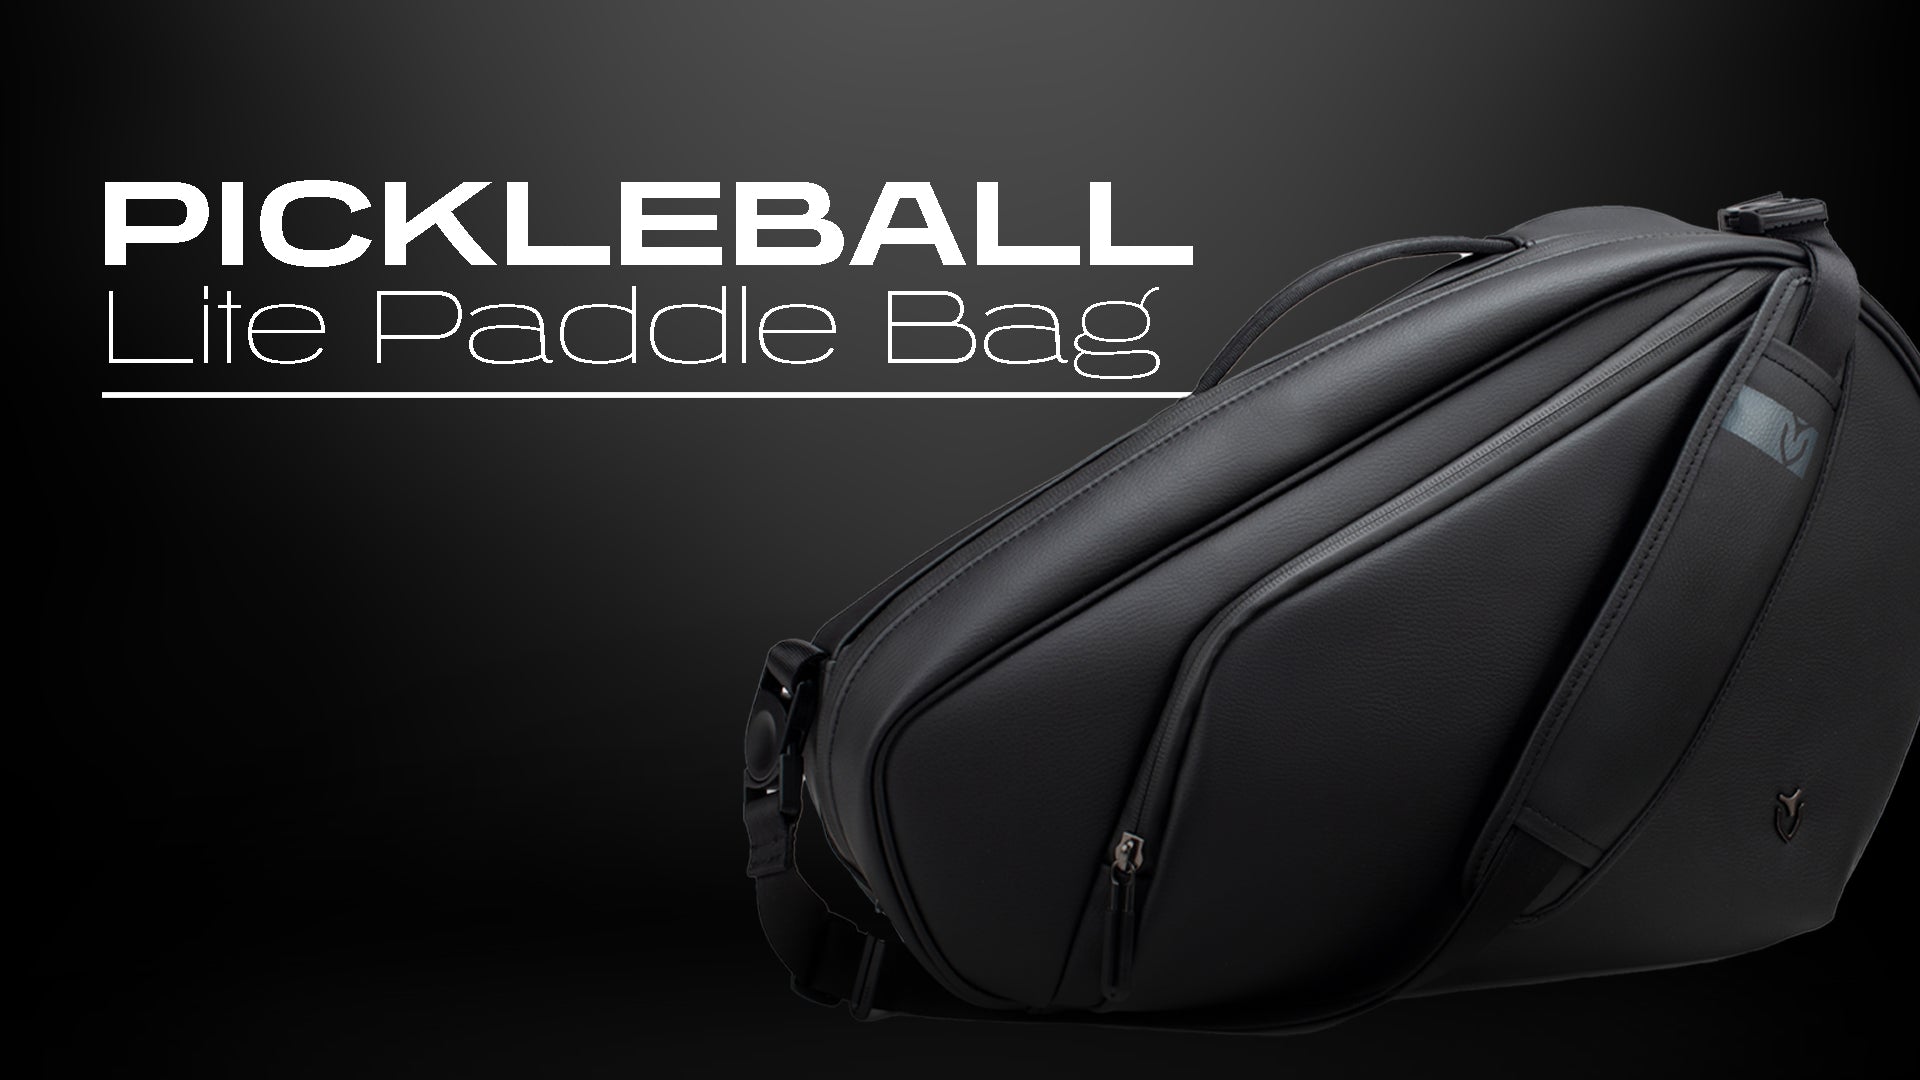 Pickleball Paddle bag in black studio with 'pickleball lite paddle bag' text in white